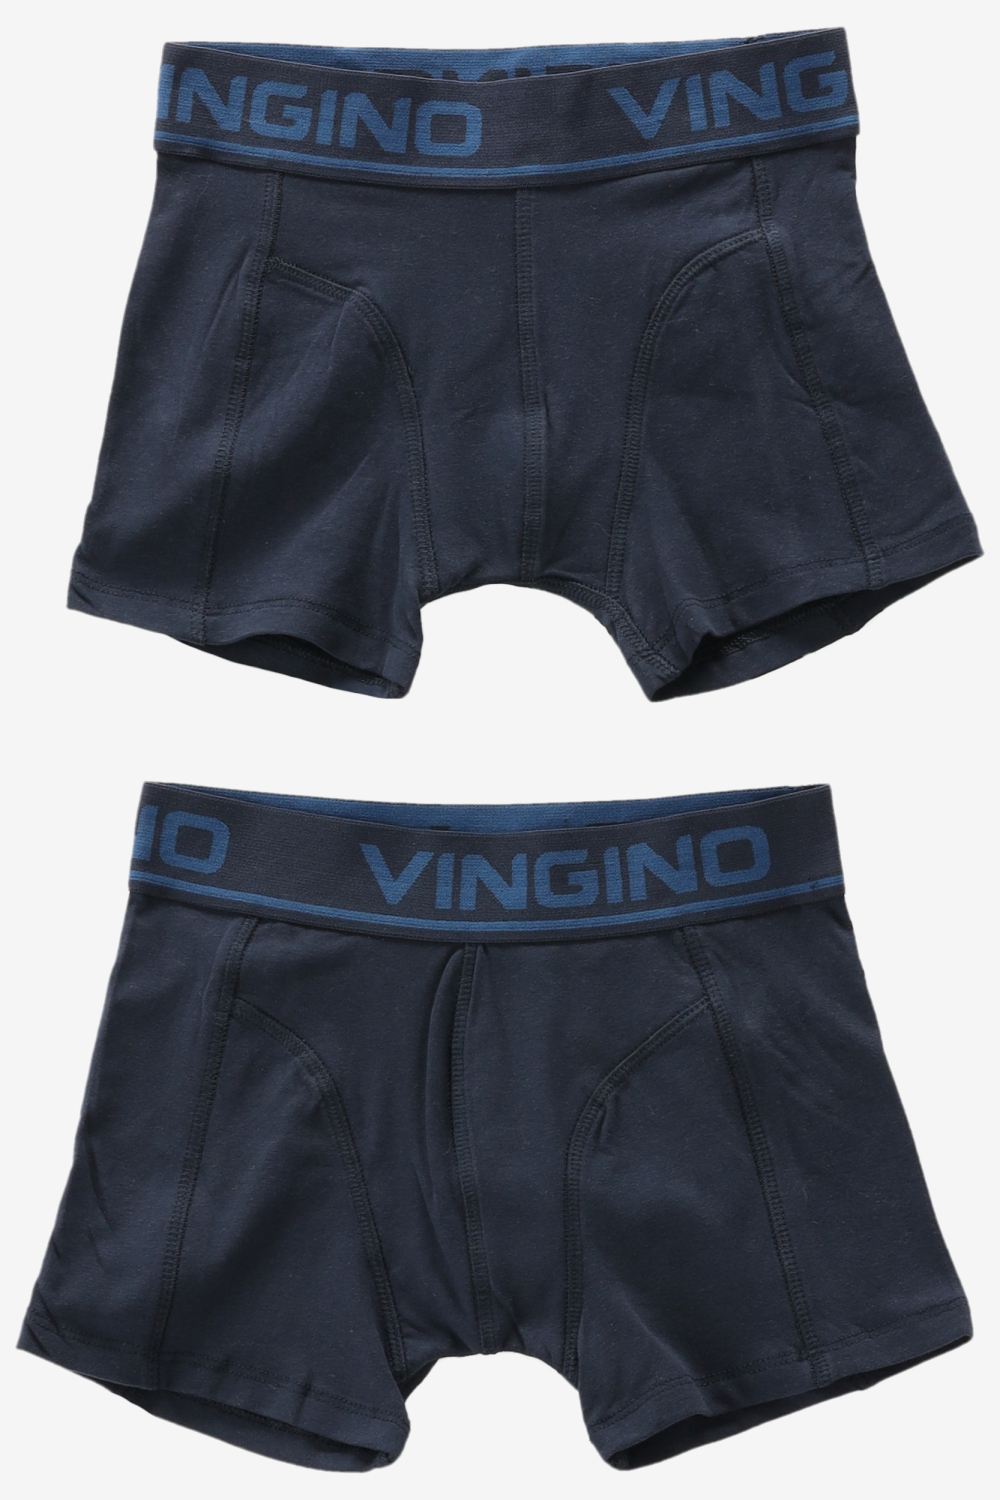 Vingino Underwear BOYS BOXER